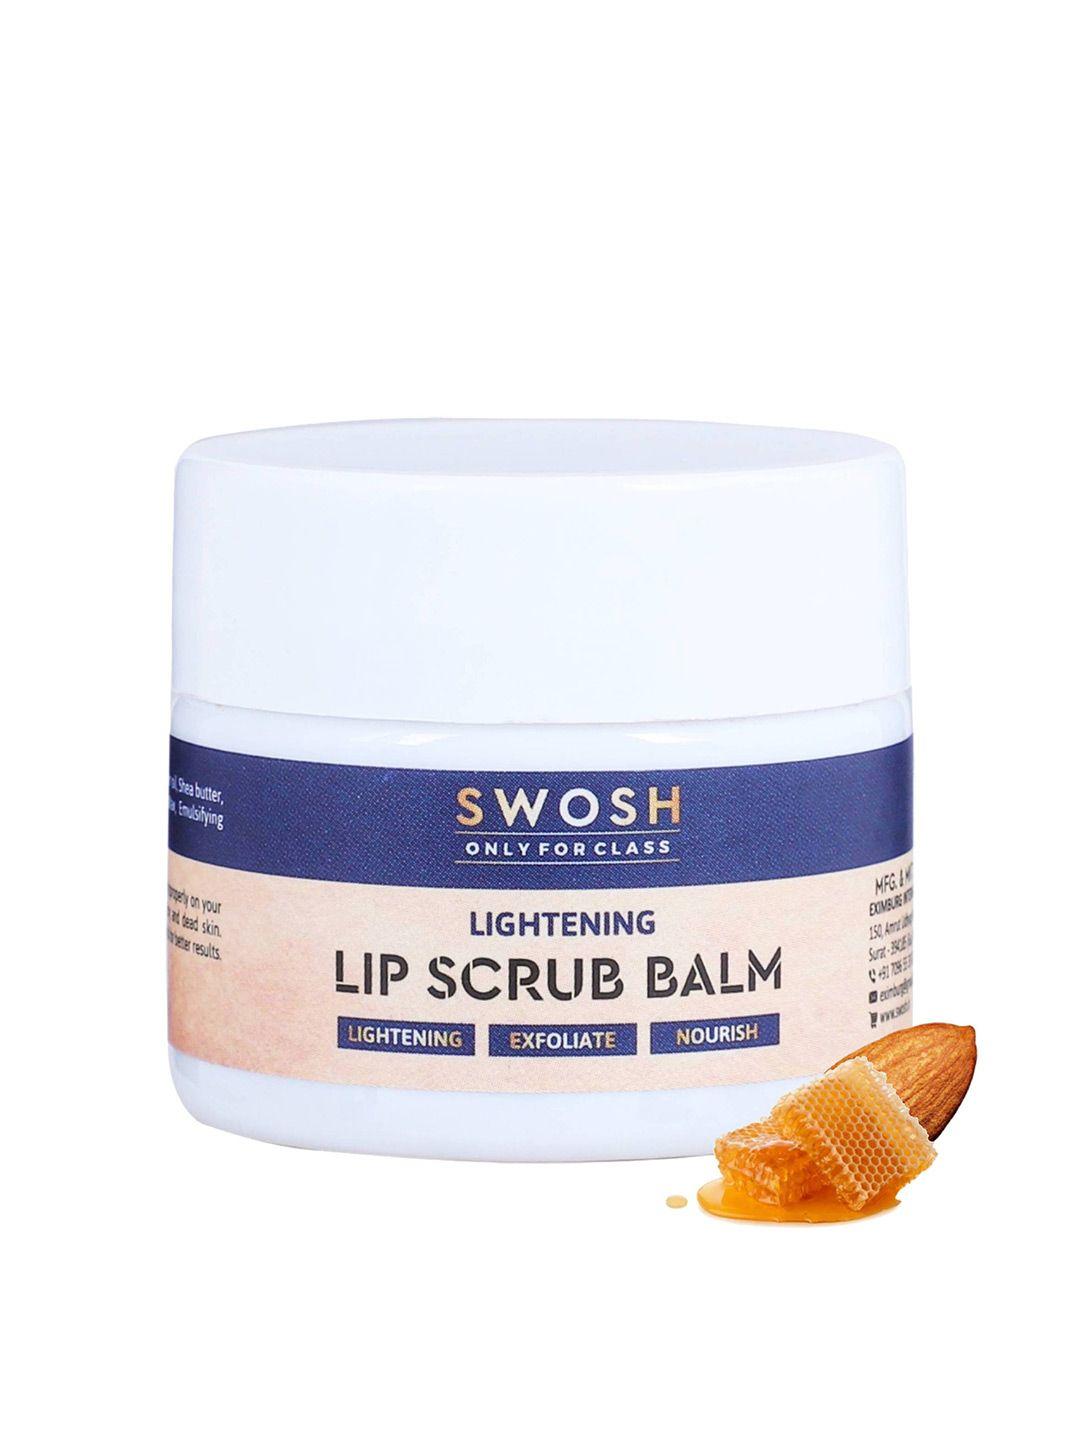 swosh-lip-scrub-balm-for-lightening-with-beeswax-&-vitamin-e---20-gm